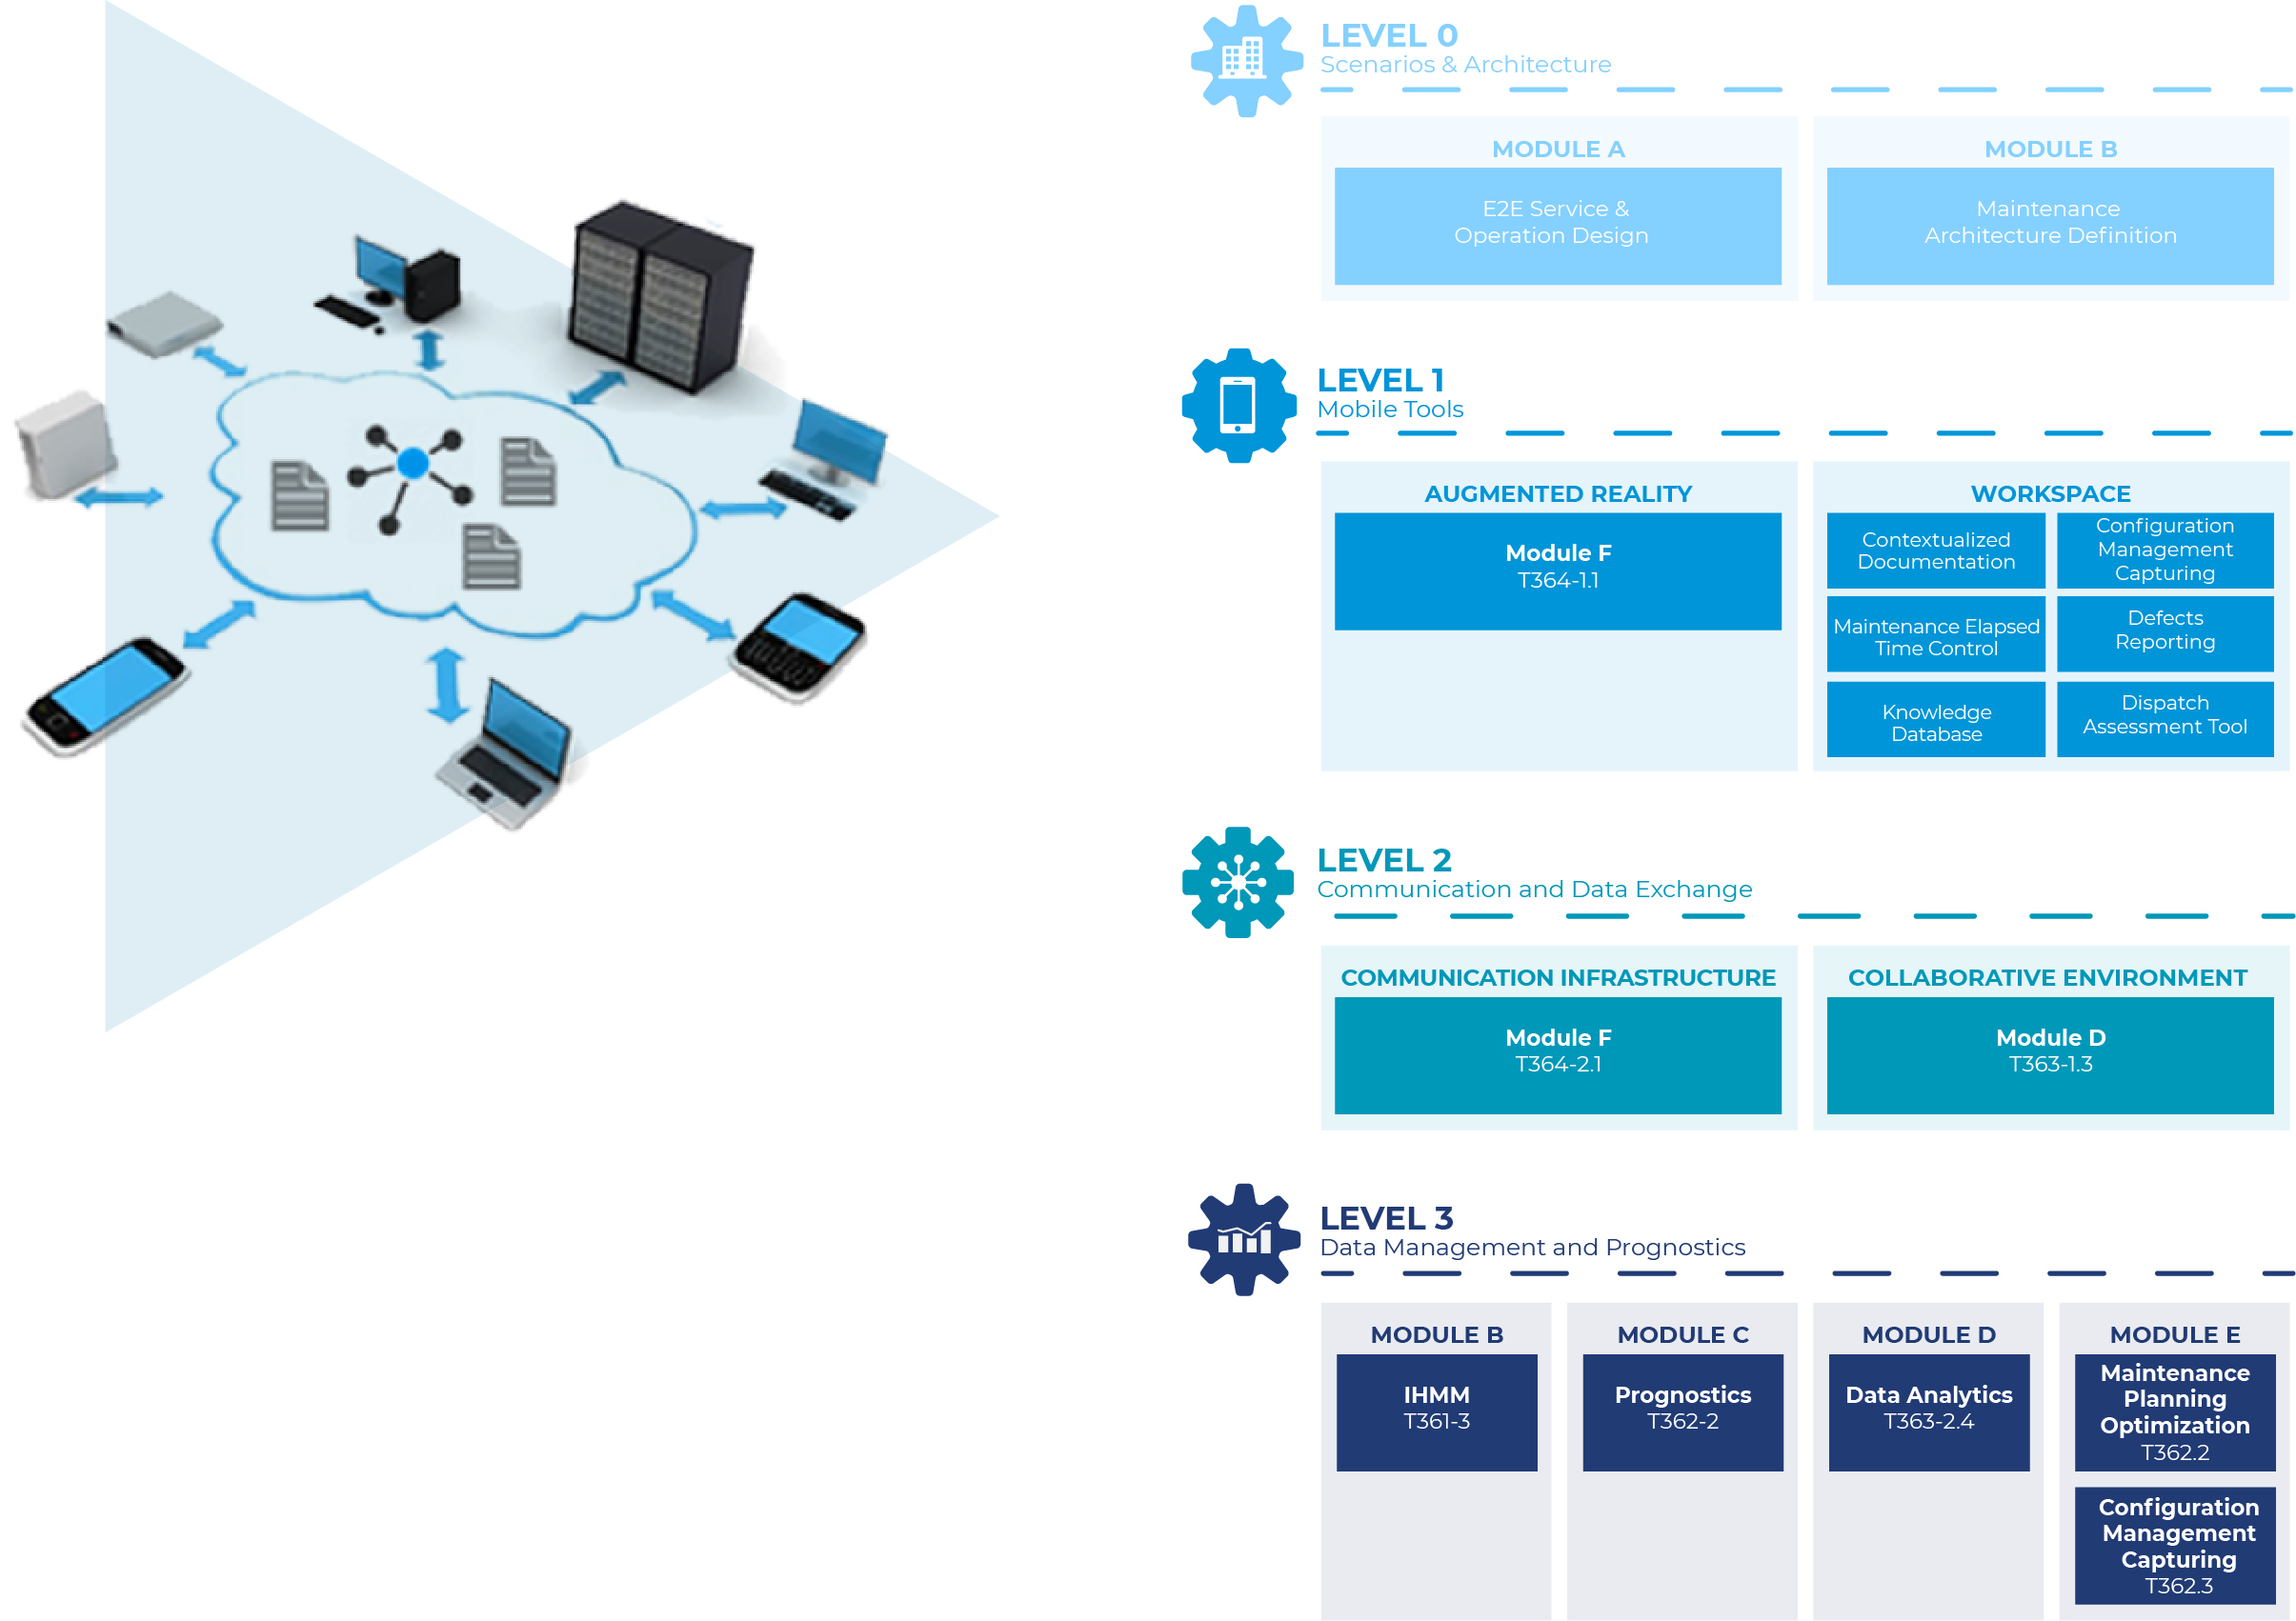 Airmes schema concept Level 0 scenarios & architecture, level 1 mobile tools, level 2 communication & data exchange, lvl 3  data management and prognostics